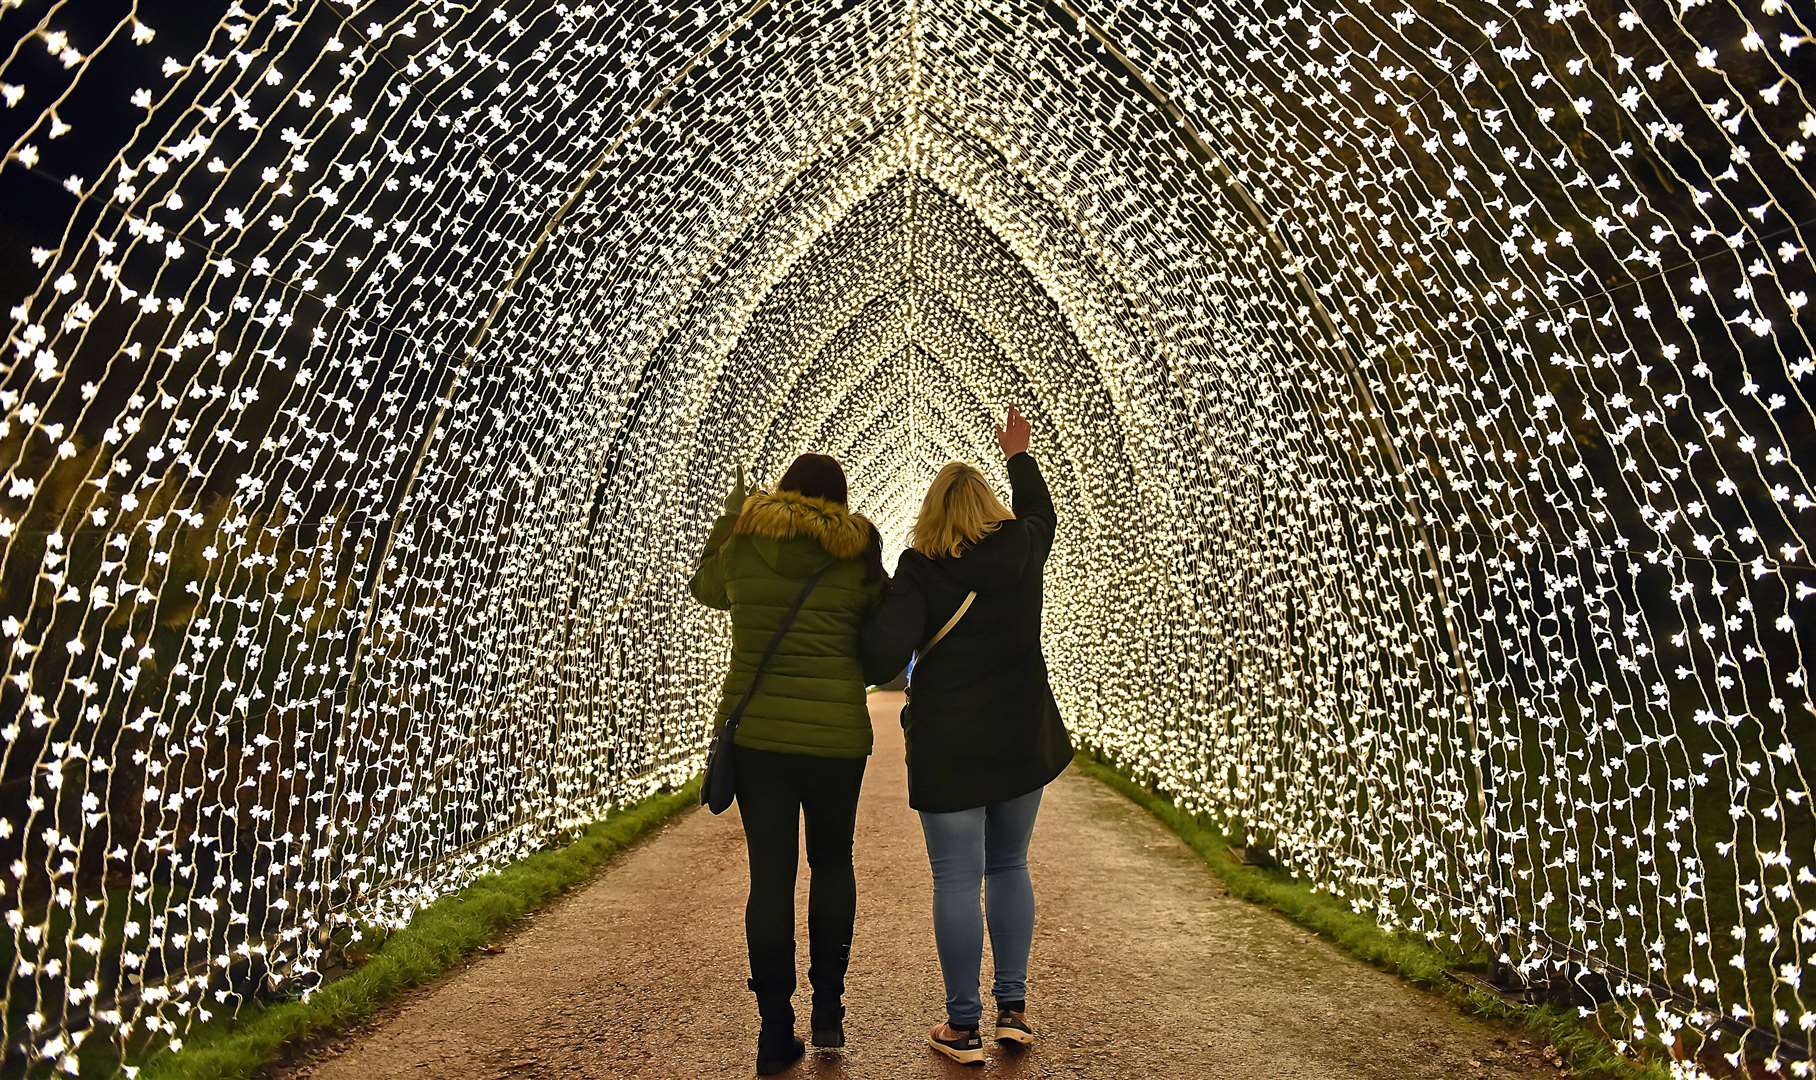 The Christmas at Bedgebury light trail will return this festive season